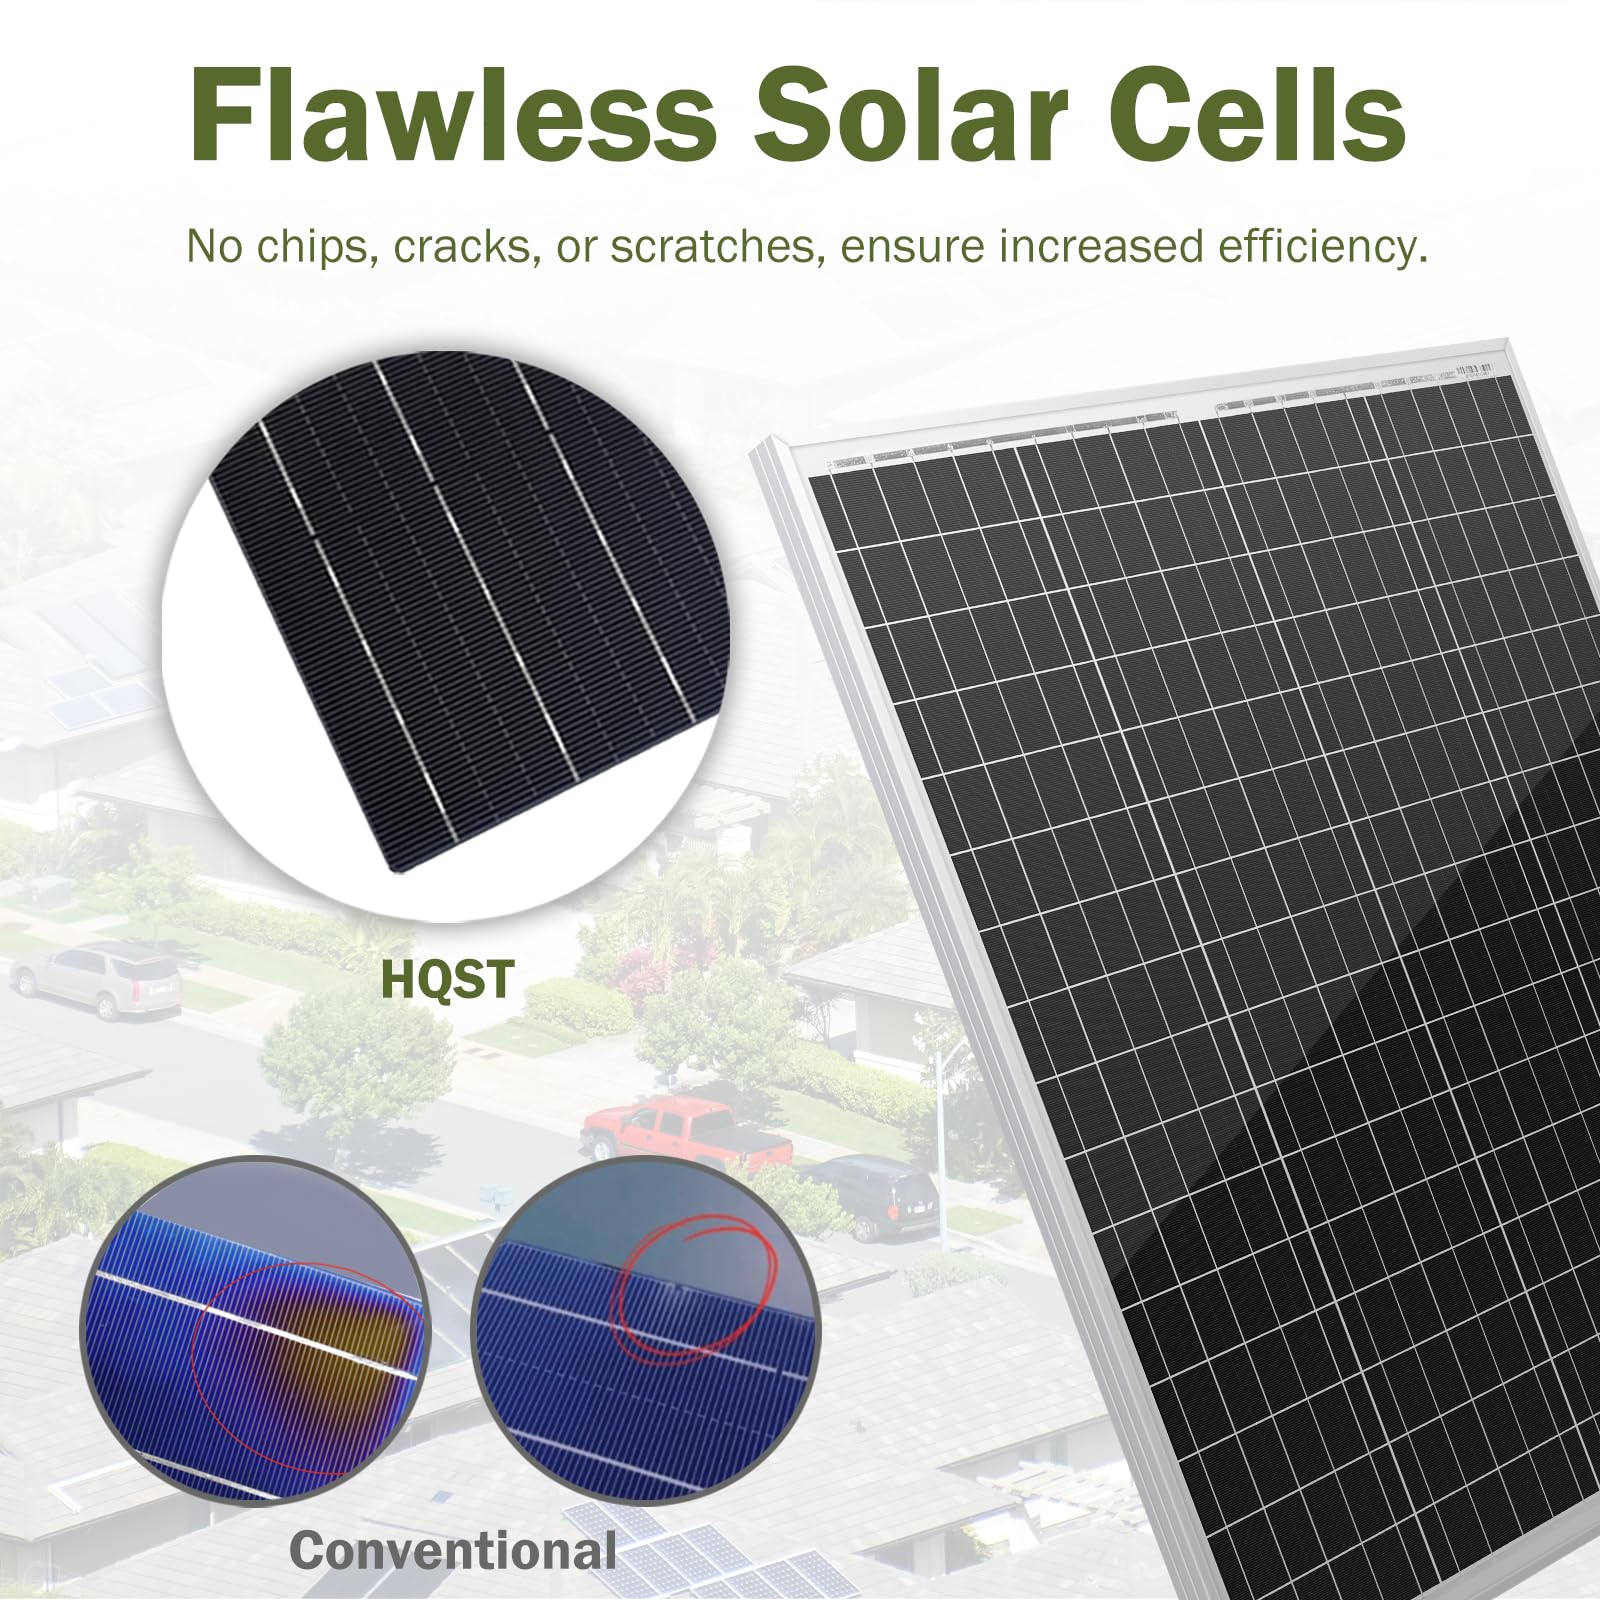 flawless solar cells